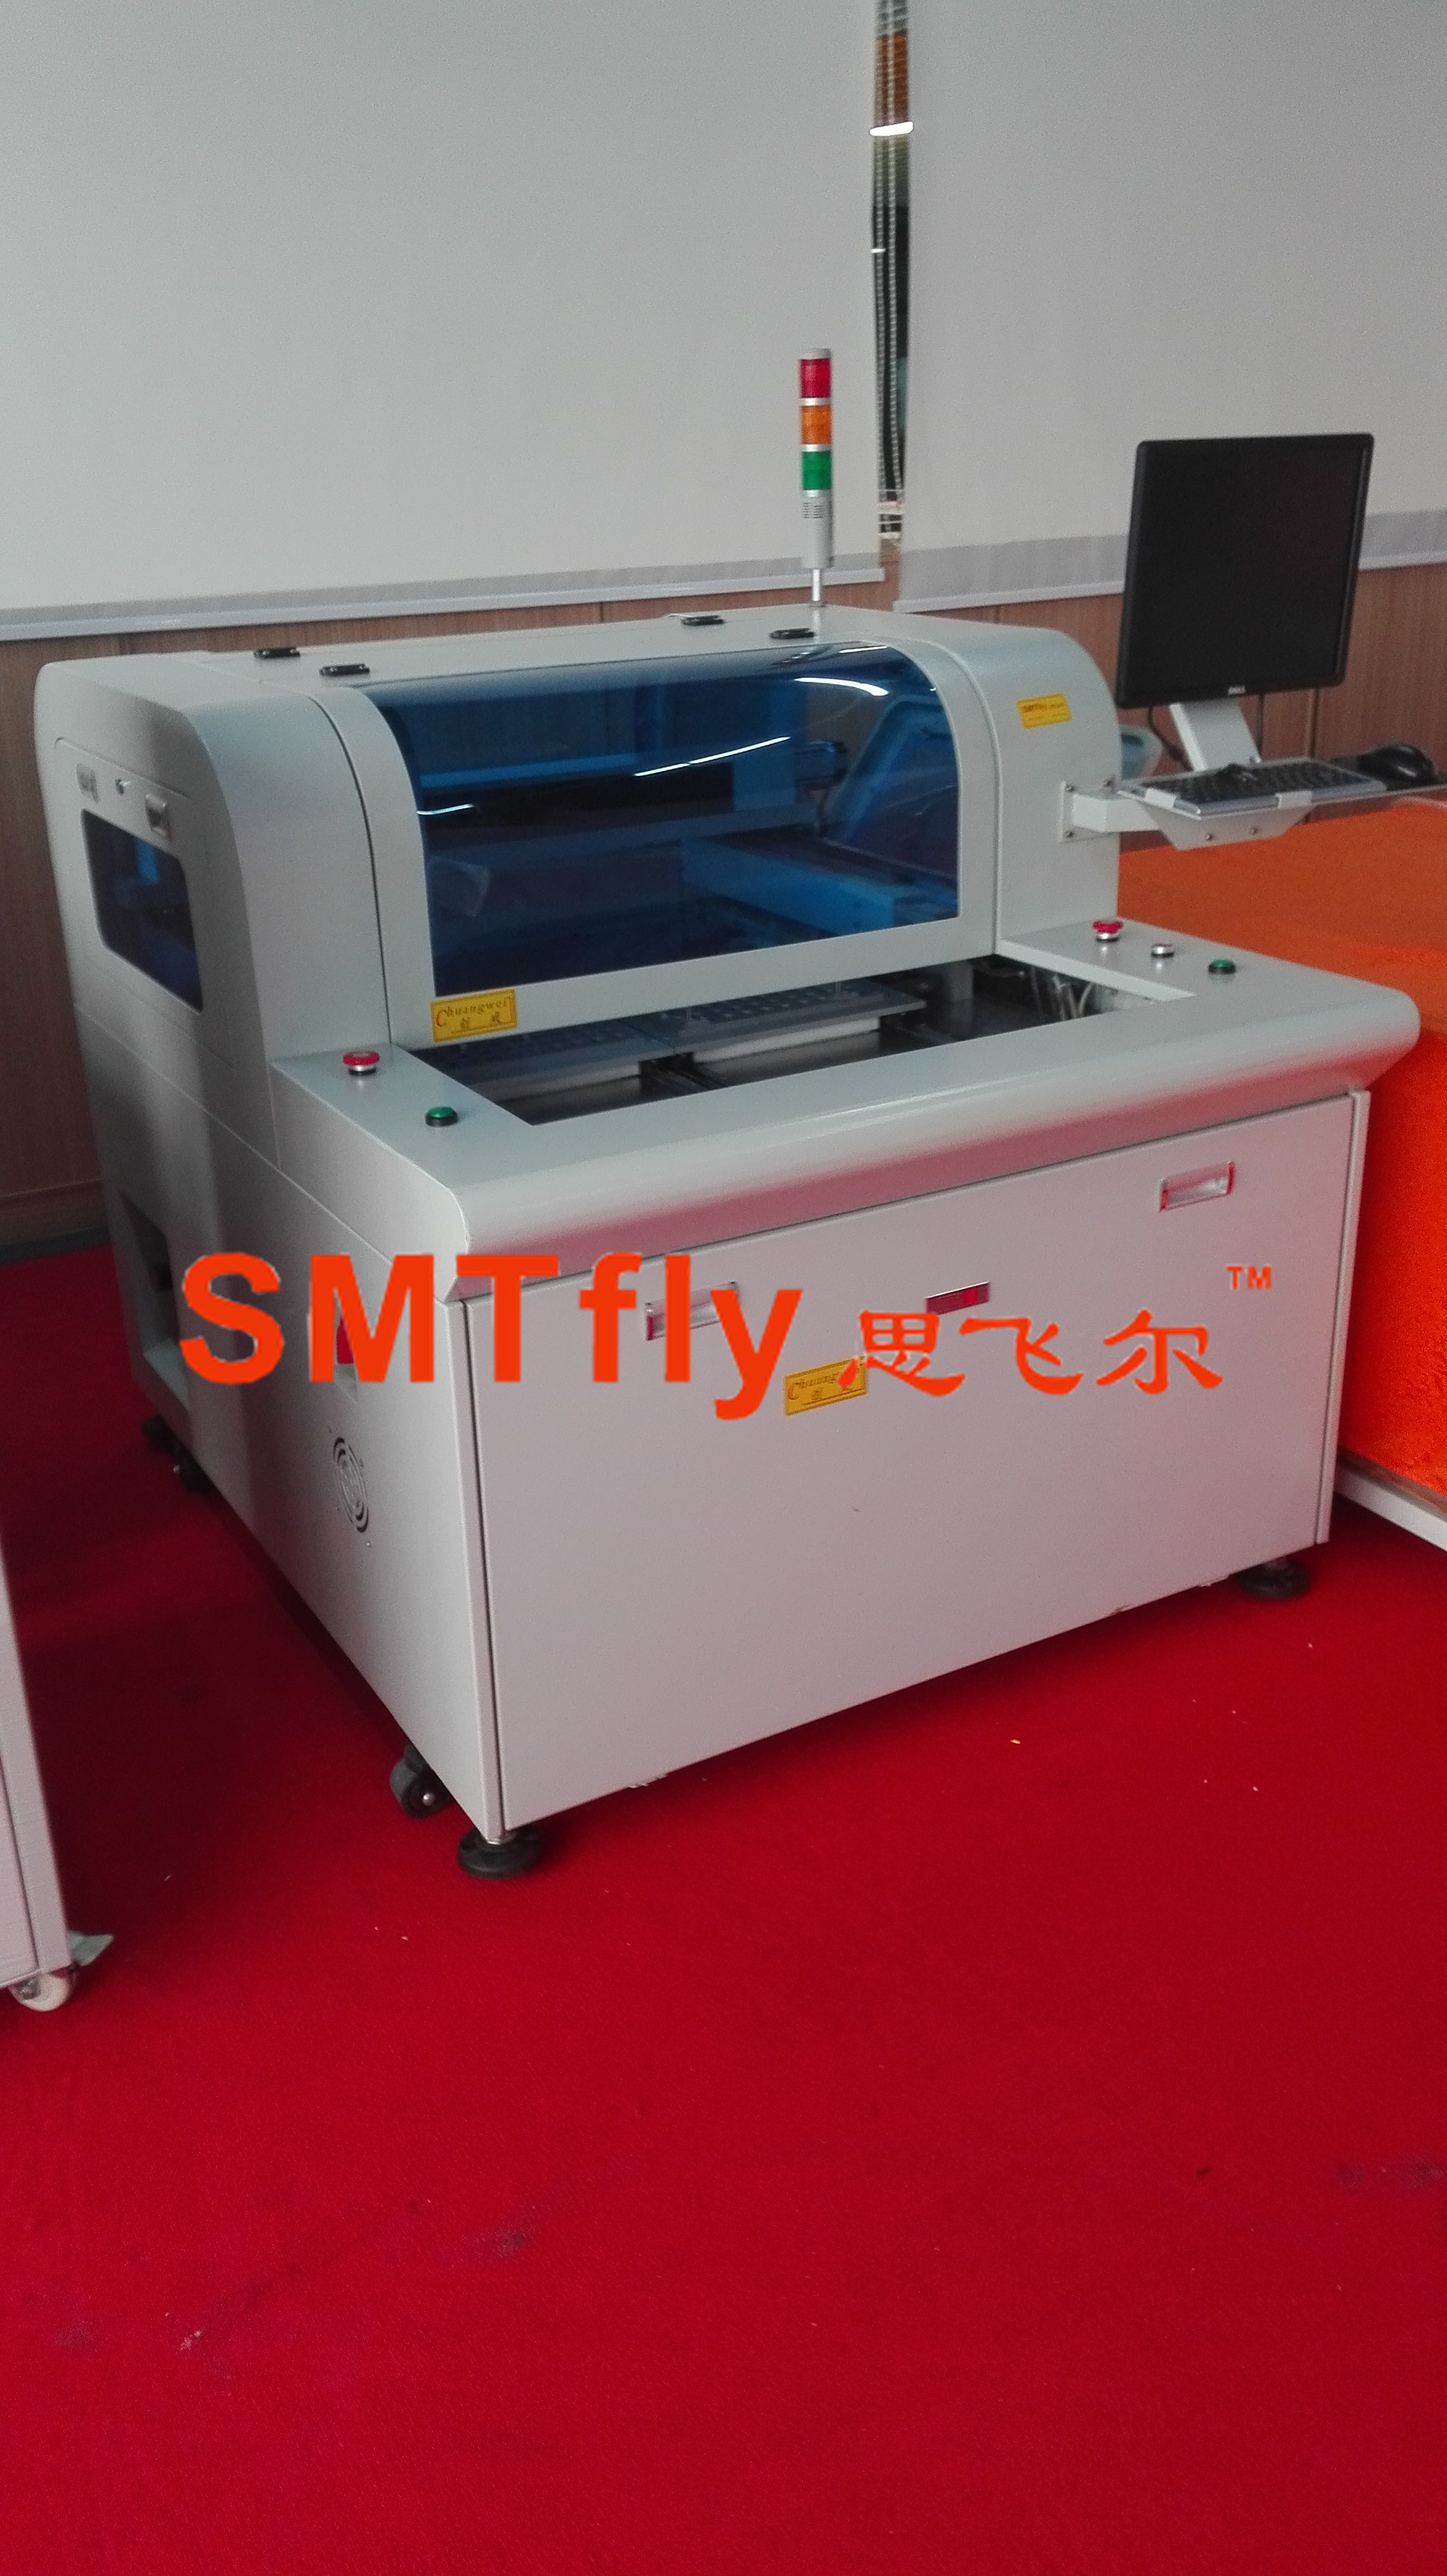 Semi-automatic PCB Router Depaneling Machine,SMTfly-F01